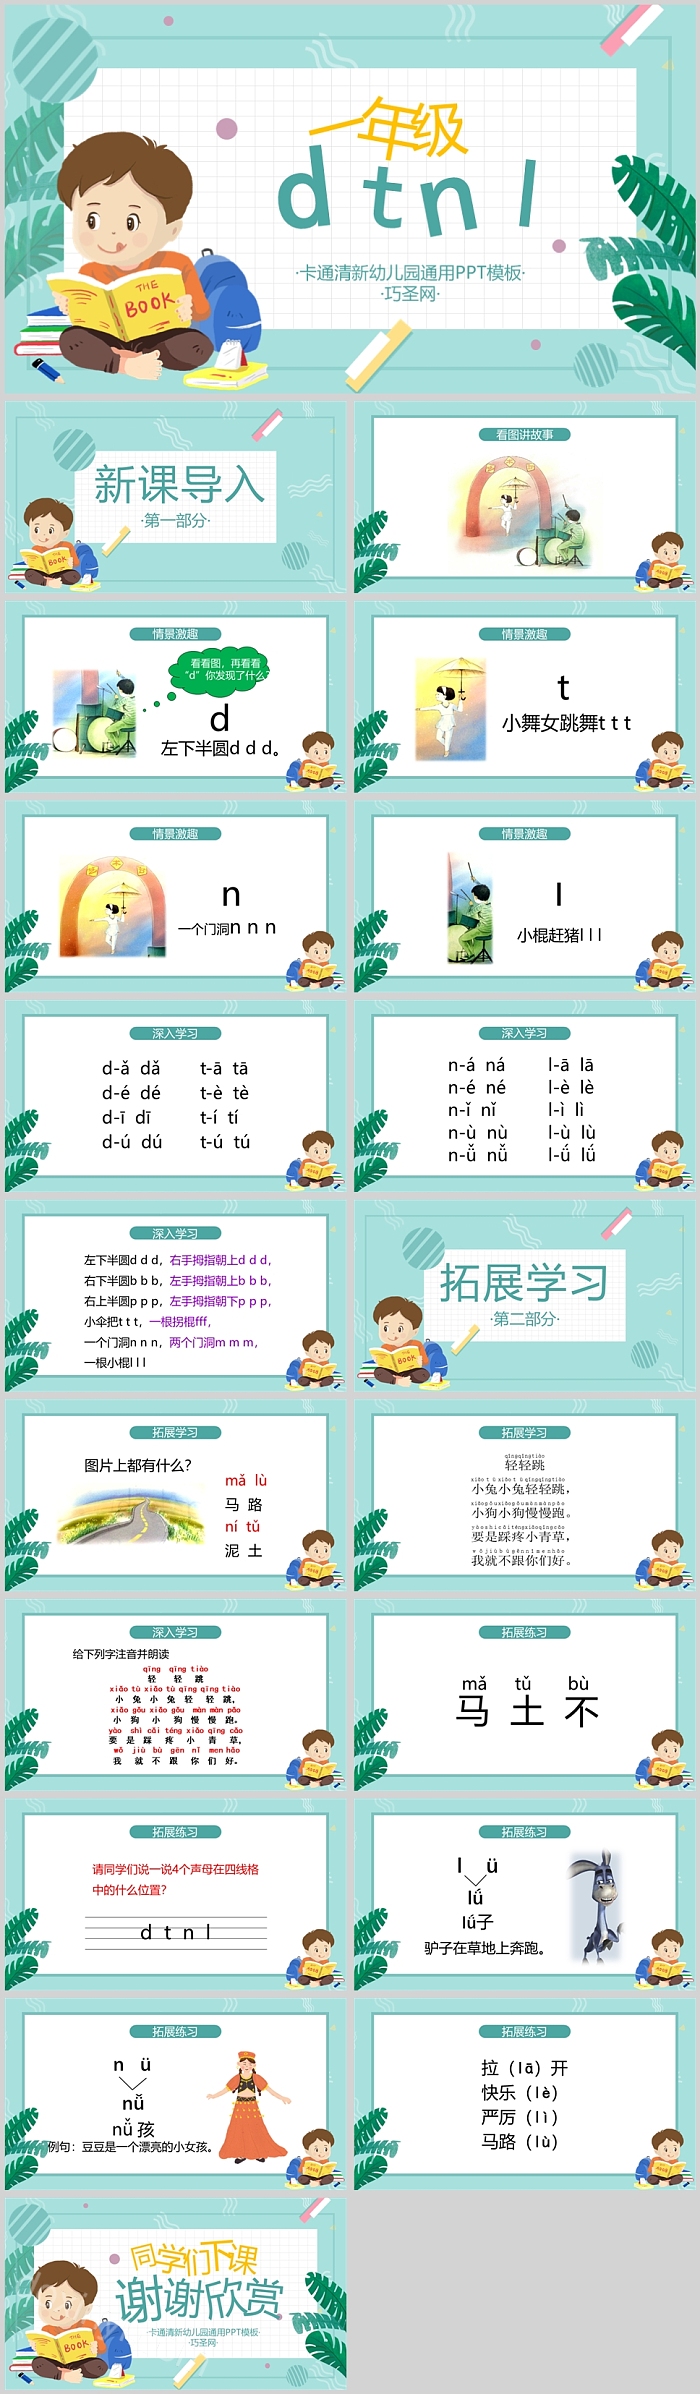 dtnl人教版卡通清新幼儿园通用PPT模板